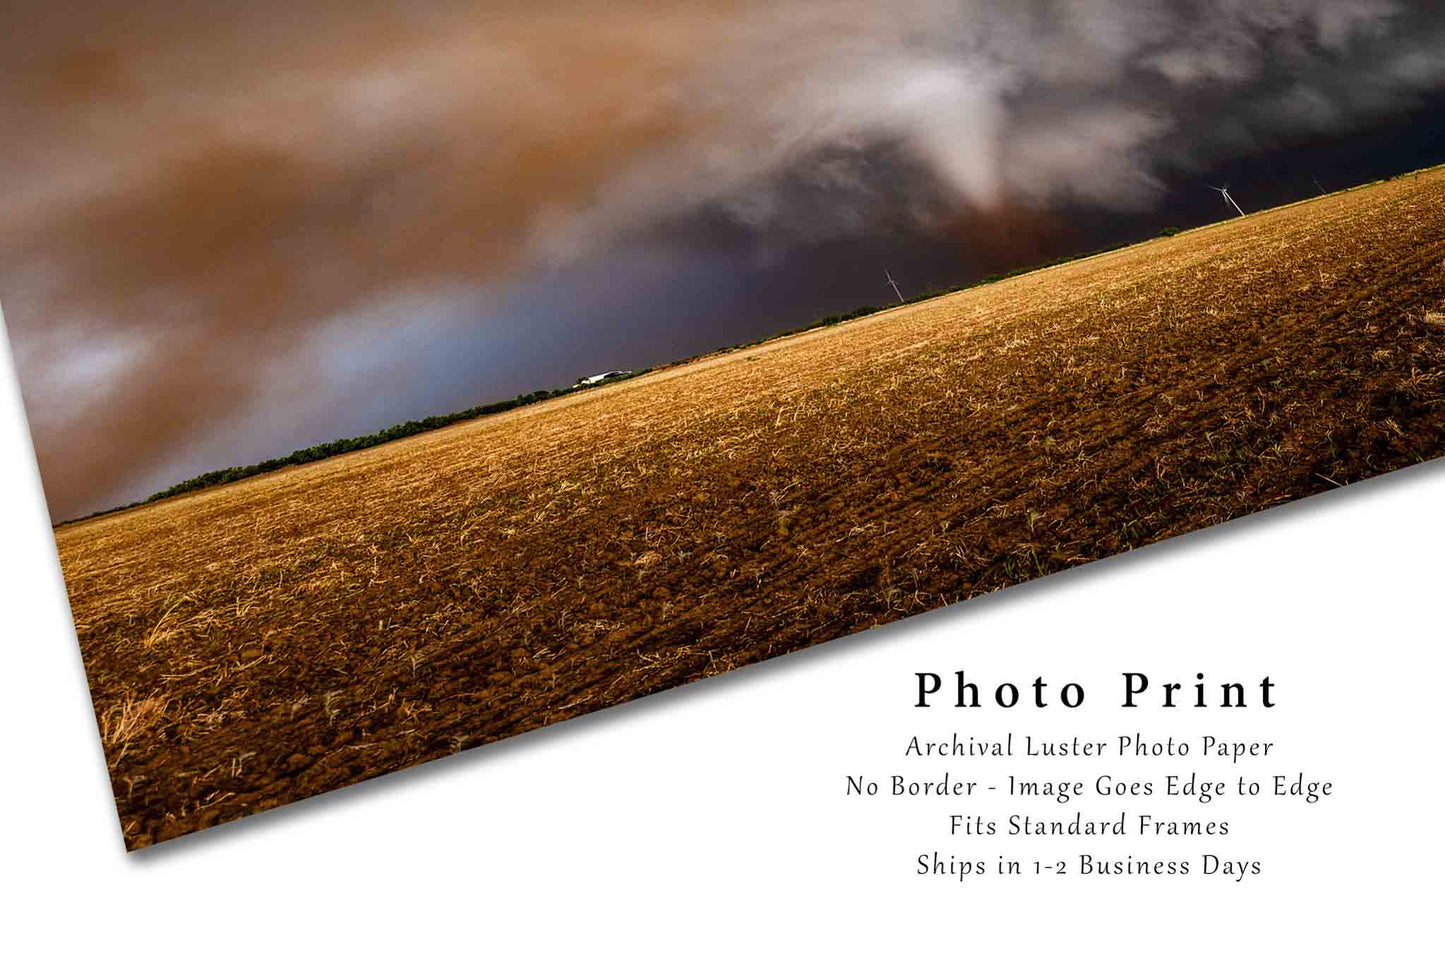 Storm Photo Print | Tornado Picture | Texas Wall Art | Thunderstorm Photography | Nature Decor